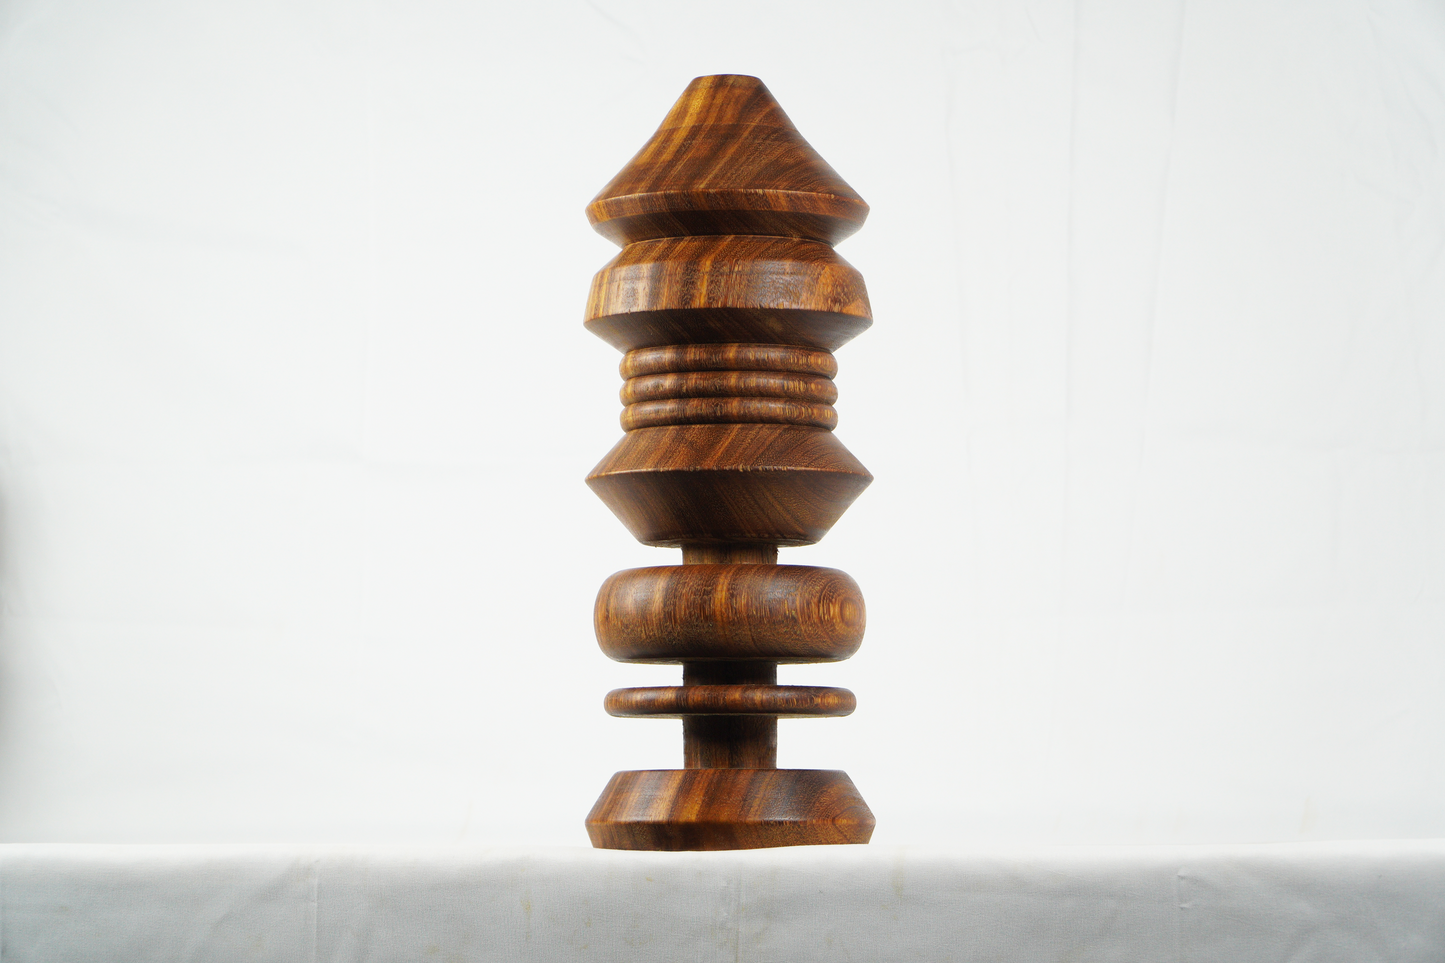 Wooden sculpture "Nimbo"